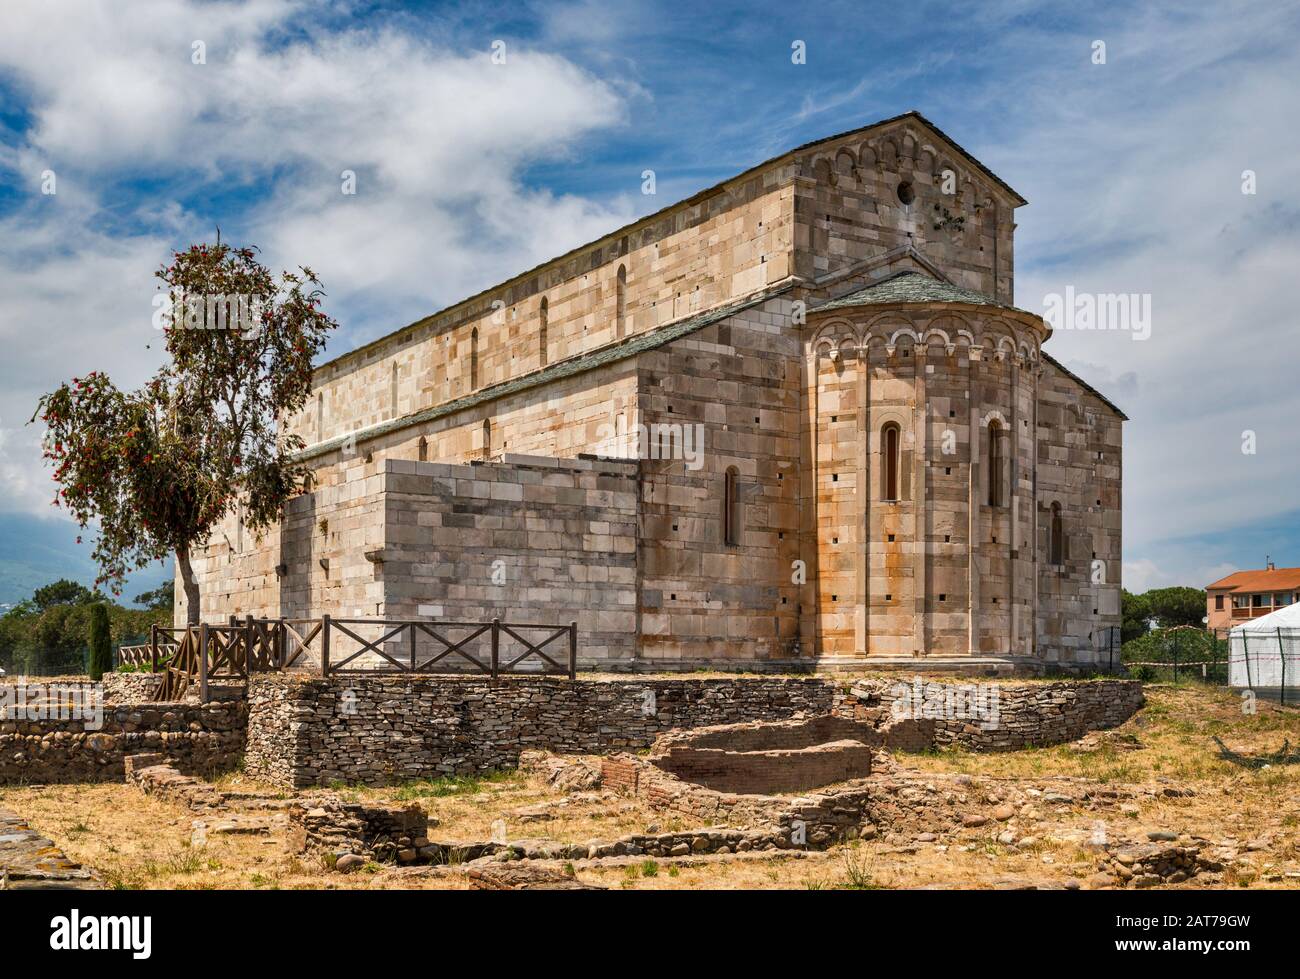 La Canonica aka Lucciana Cathedral, 12th century, Romanesque style, and Mariana archaeological site in Lucciana, Haute-Corse, Corsica, France Stock Photo